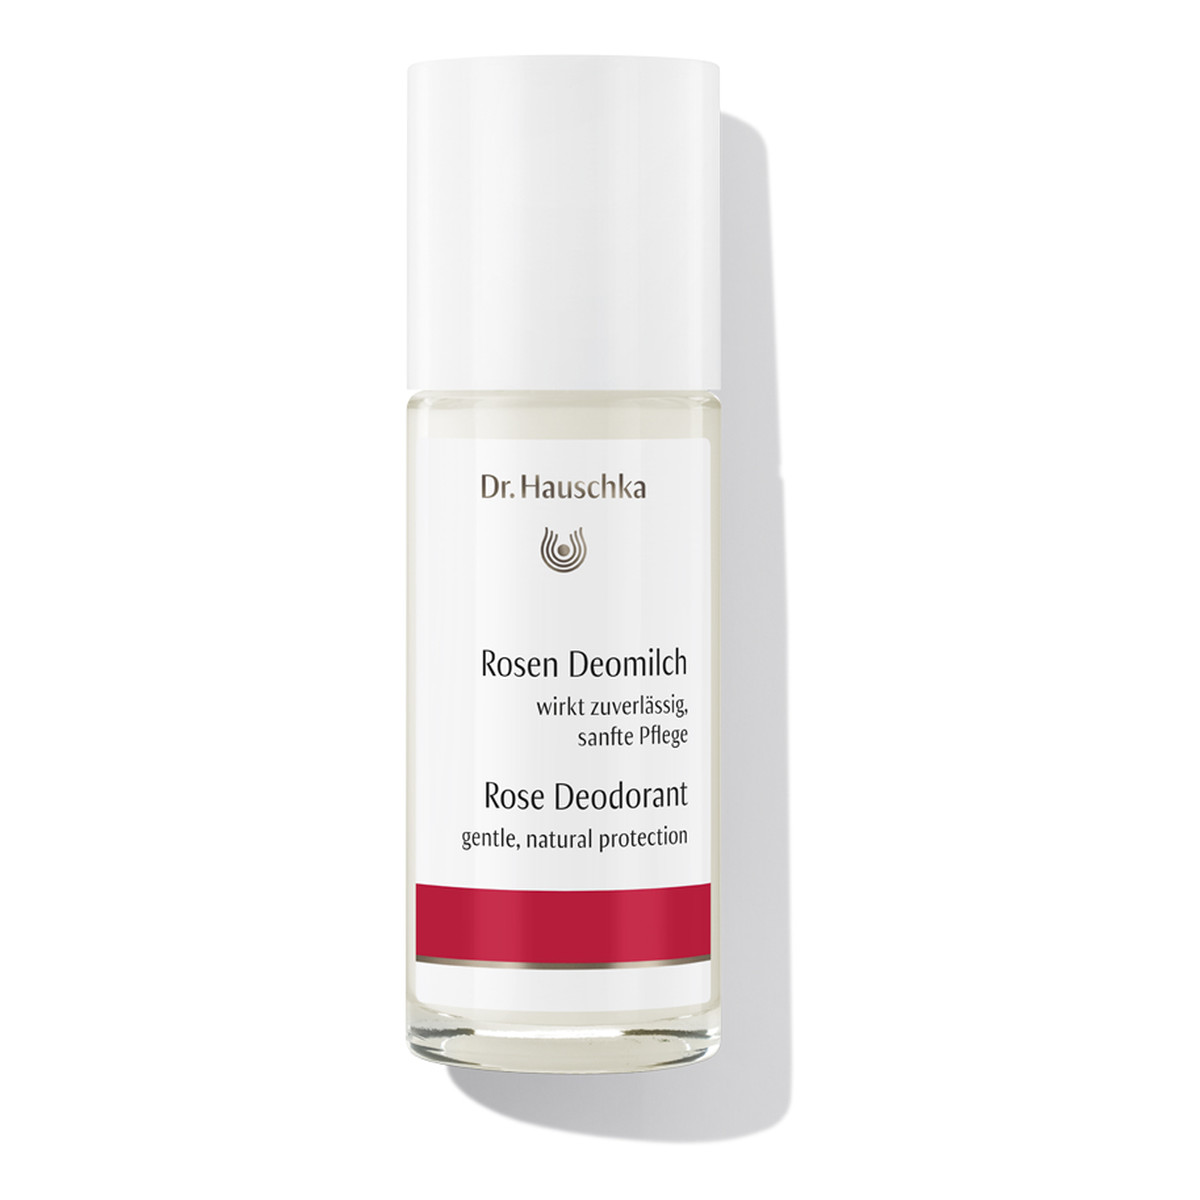 Dr. Hauschka Deodorant Gentle Natural Protection dezodorant Rose 50ml